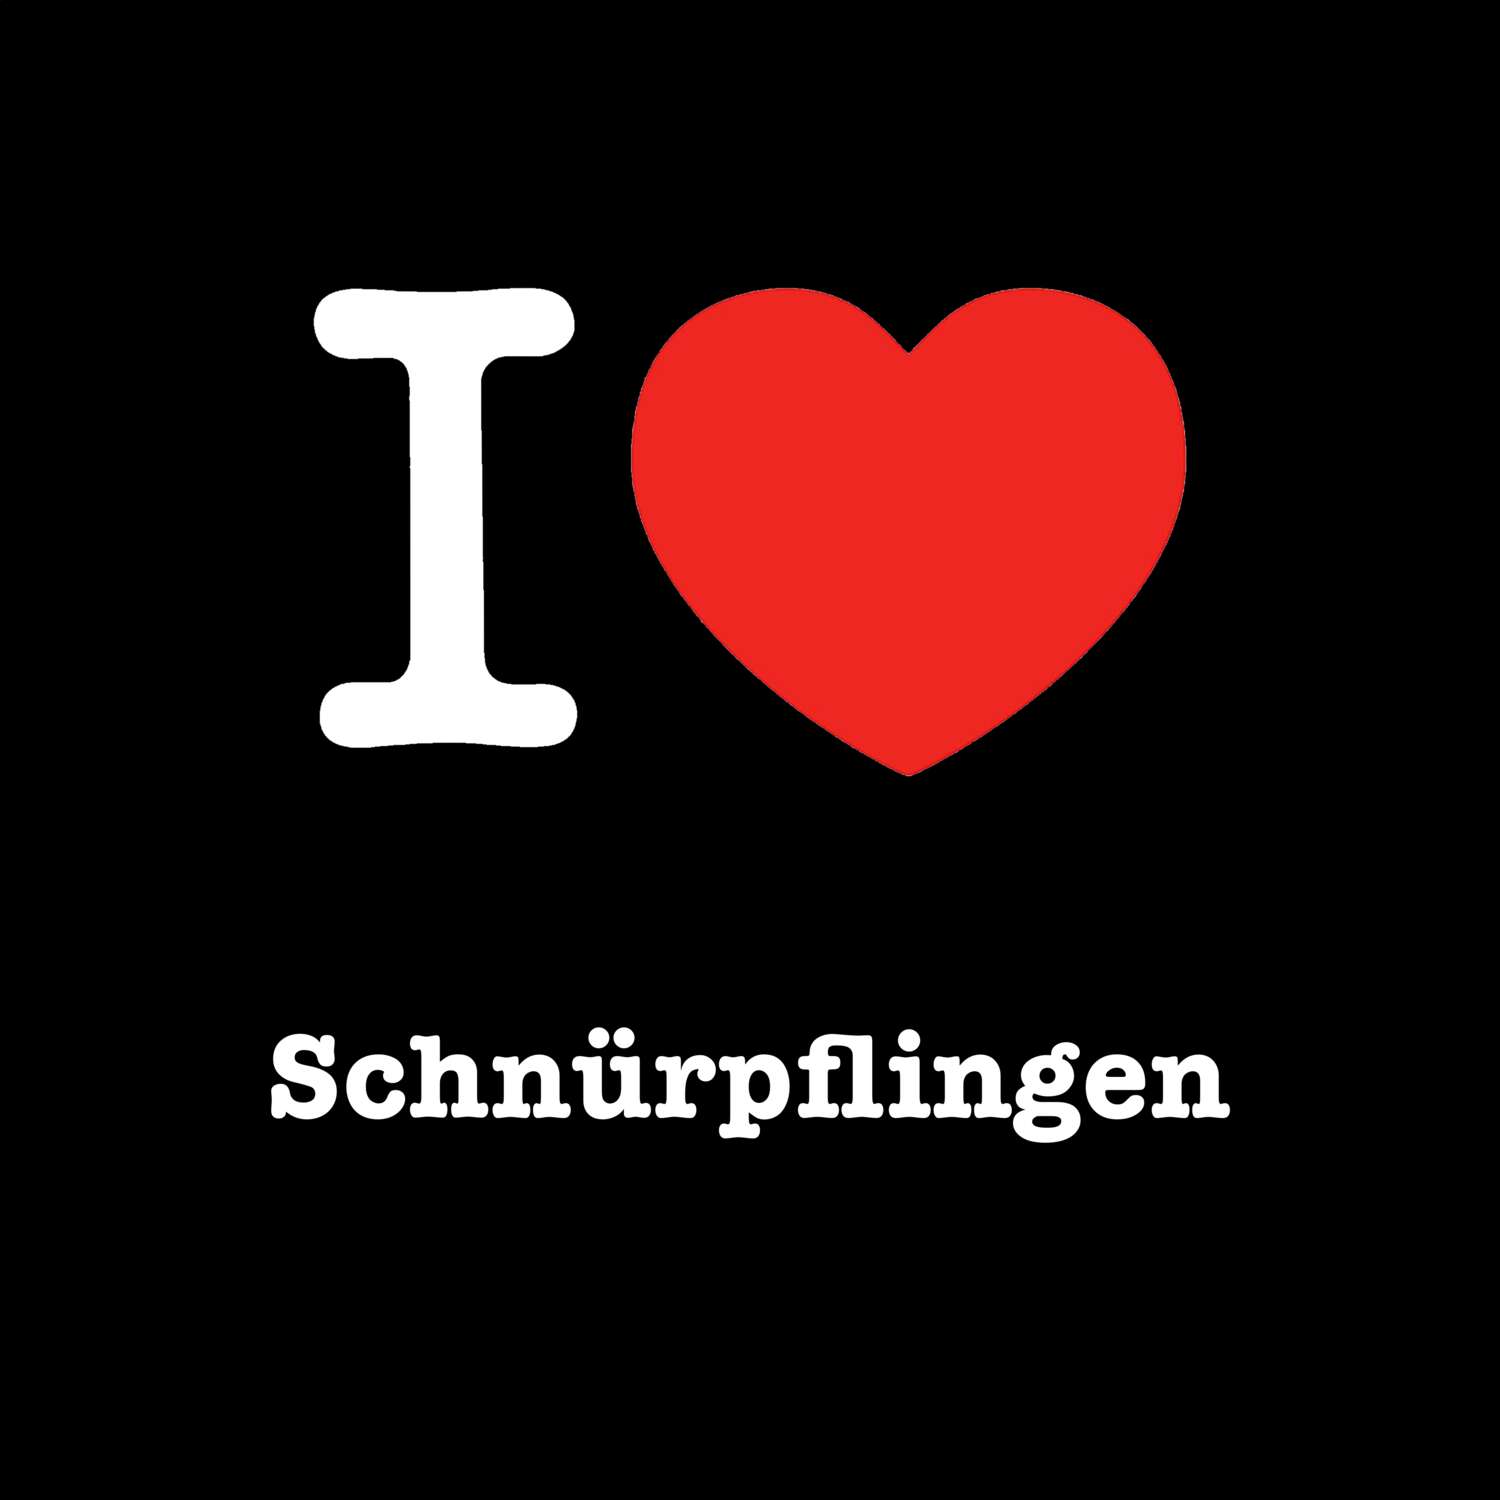 Schnürpflingen T-Shirt »I love«